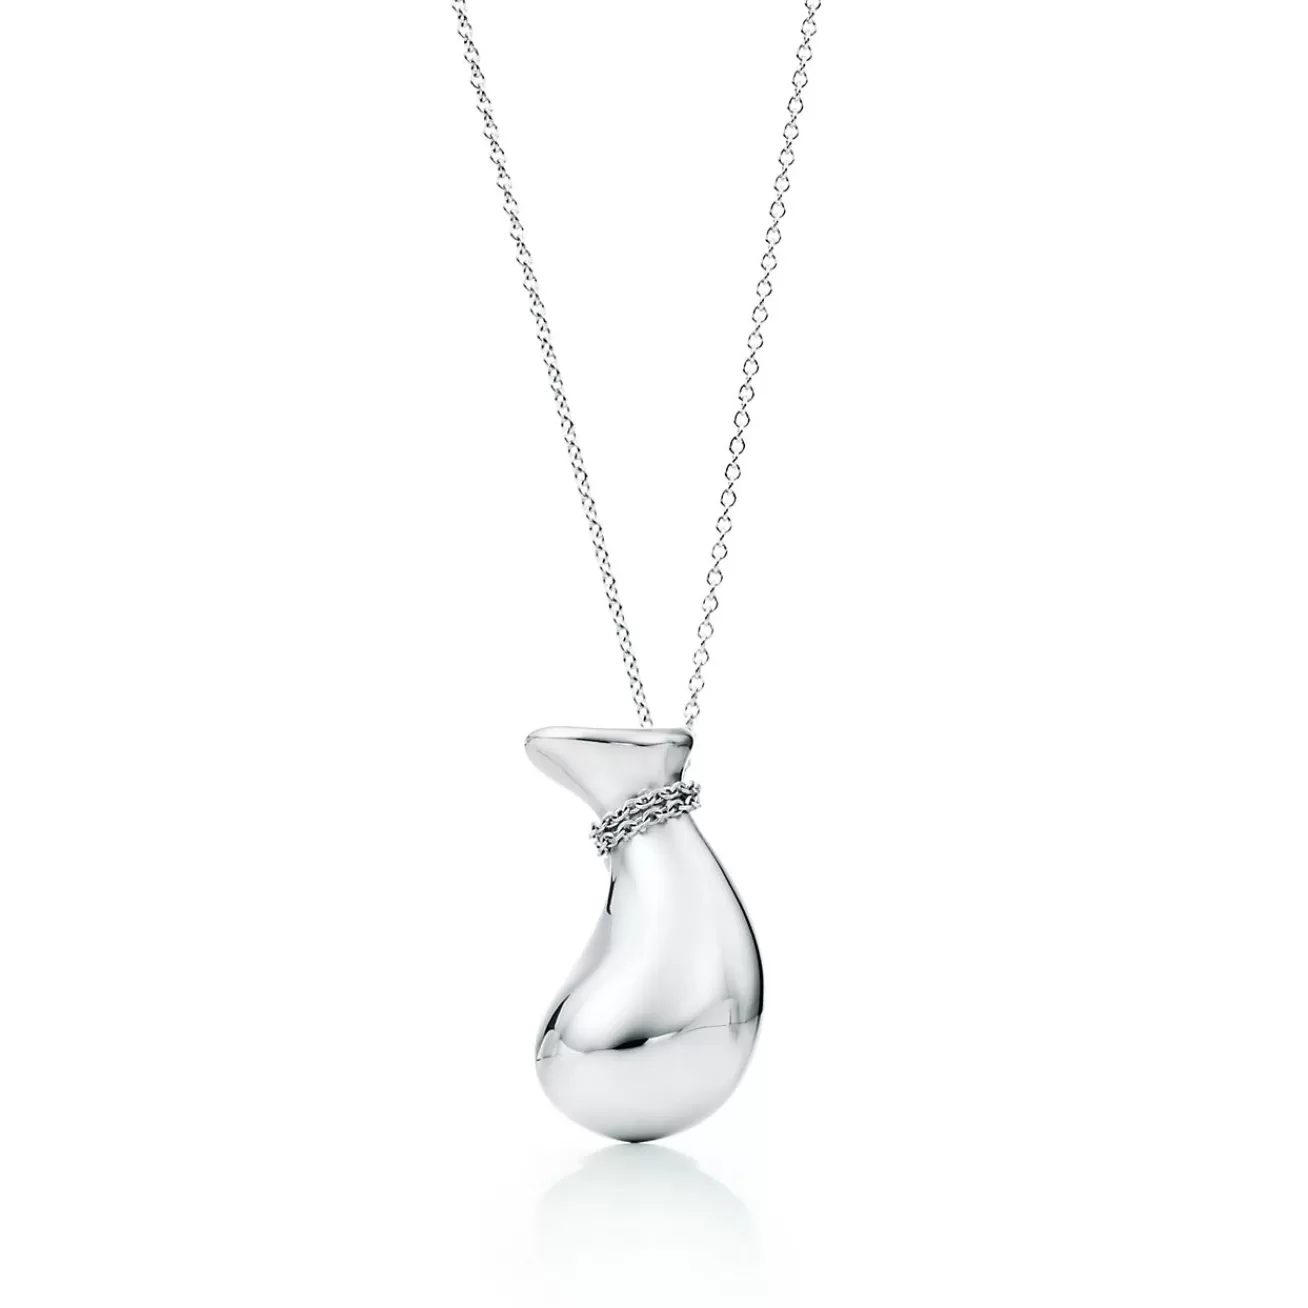 Tiffany & Co. Elsa Peretti® Bottle jug pendant in sterling silver, small. | ^ Necklaces & Pendants | Sterling Silver Jewelry